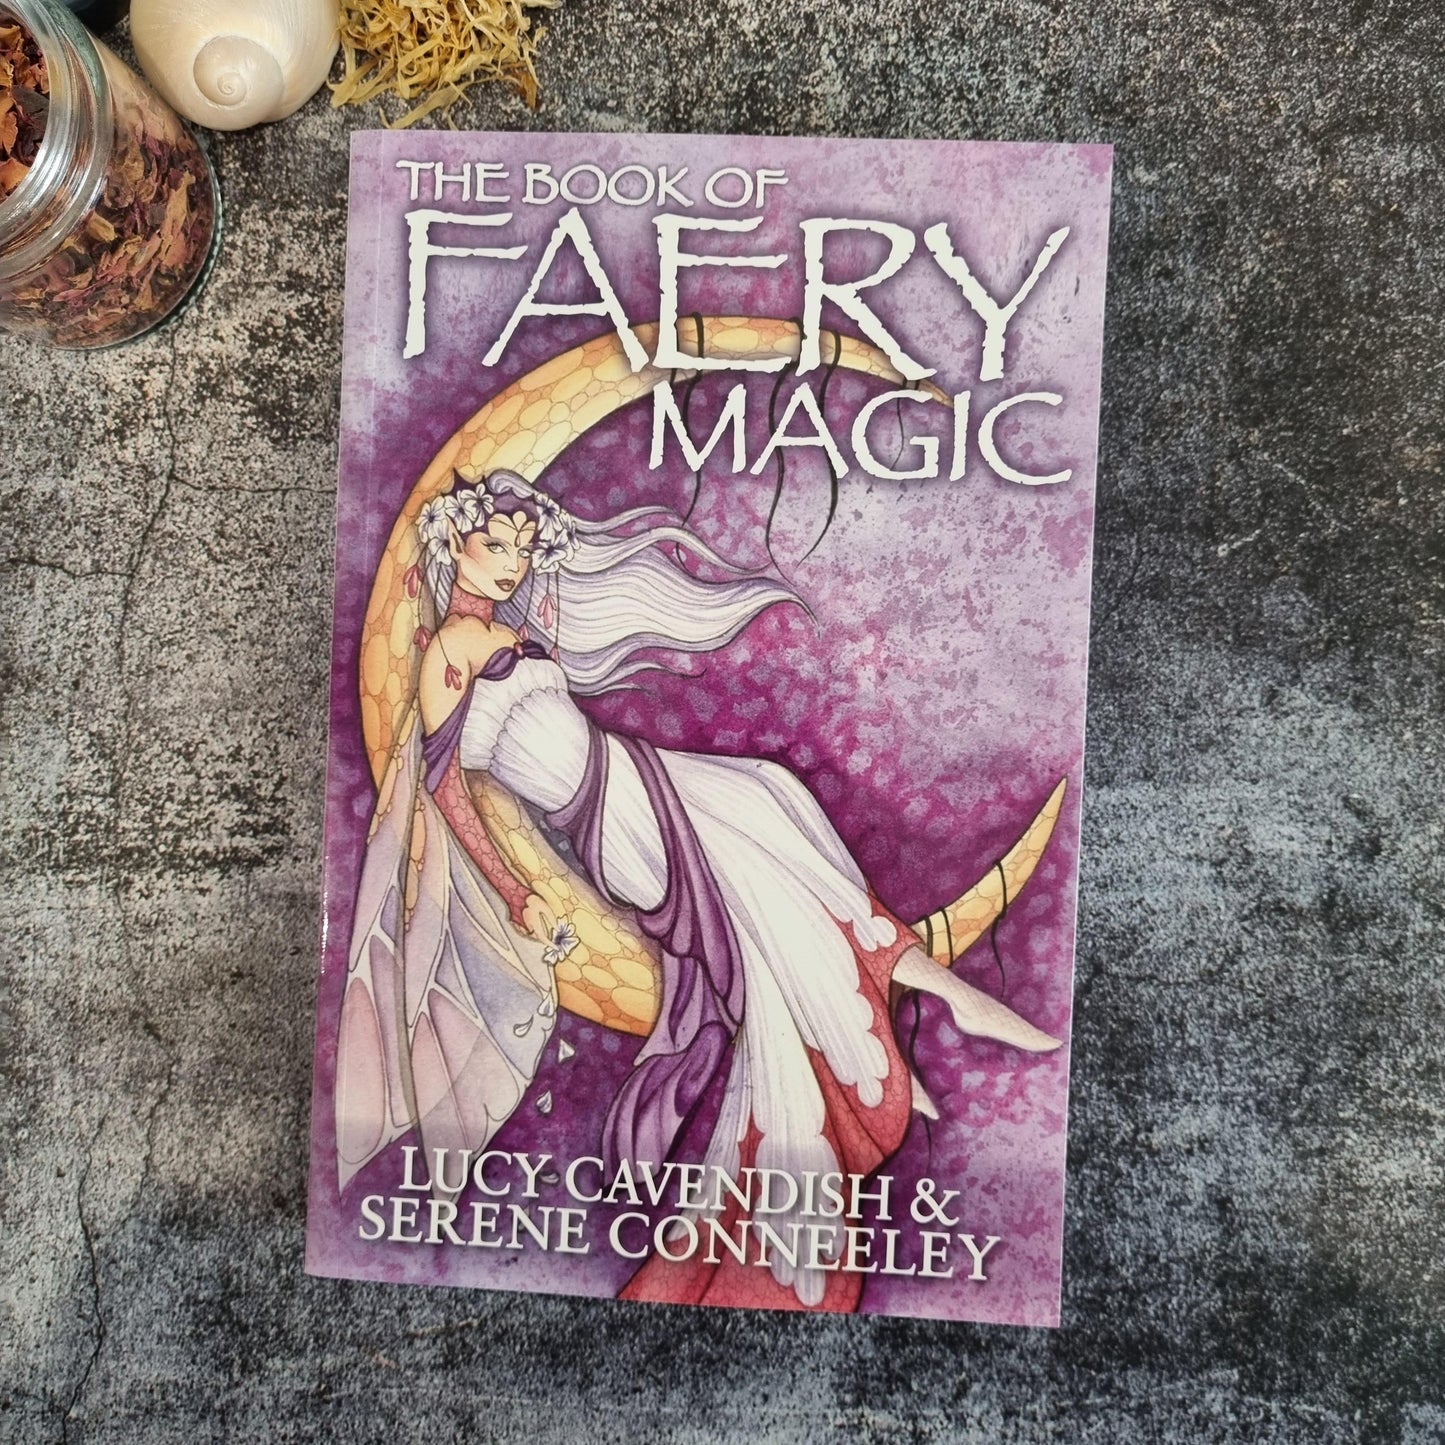 The Book of Faery Magic